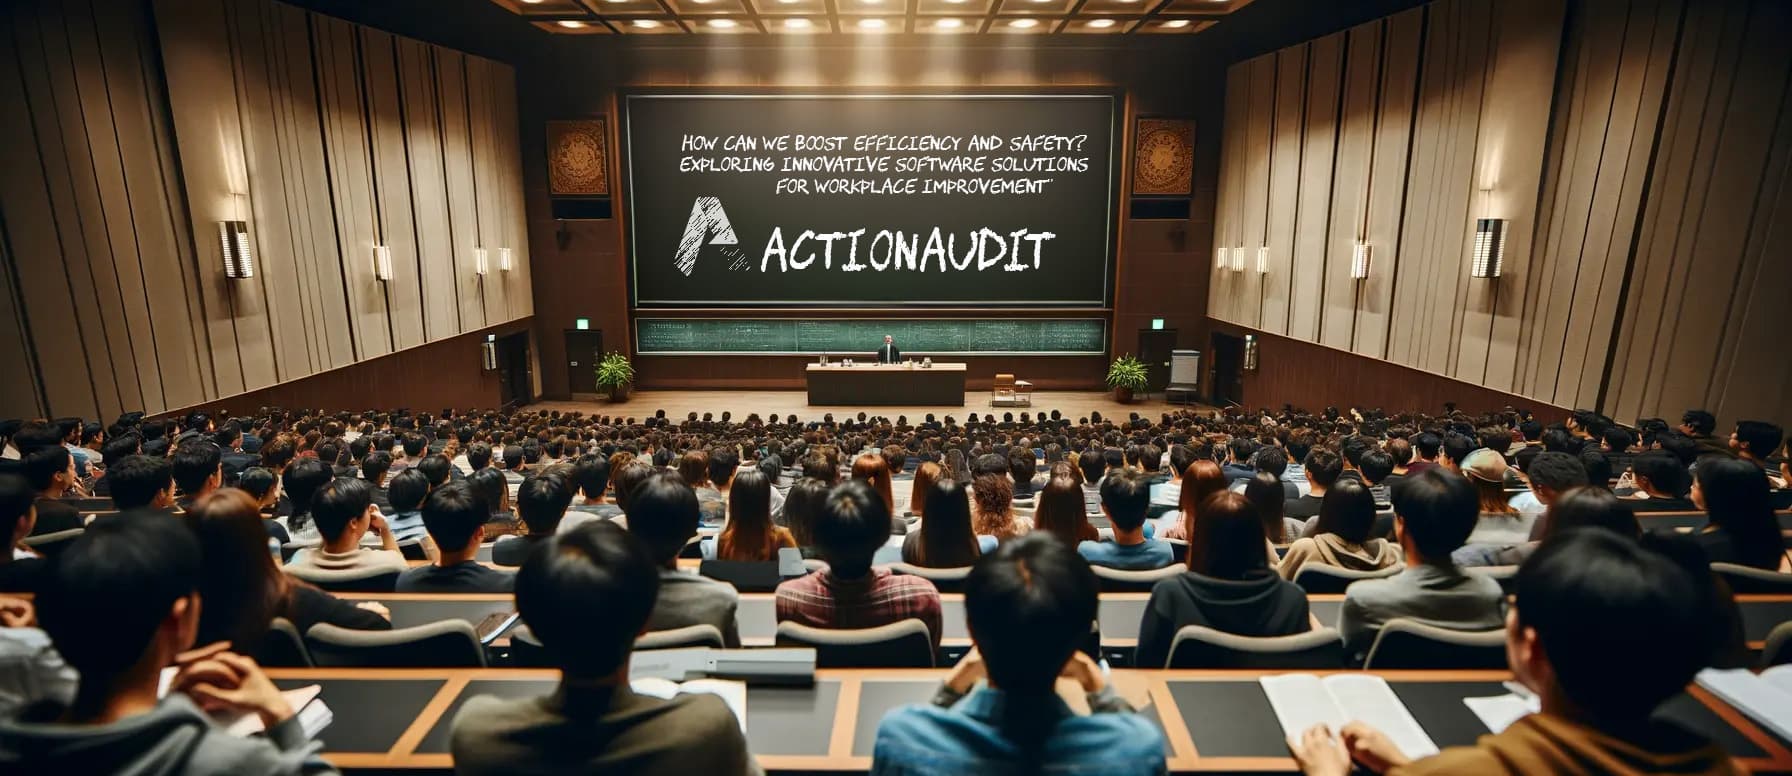 Action Audit dla szkół i uczelni